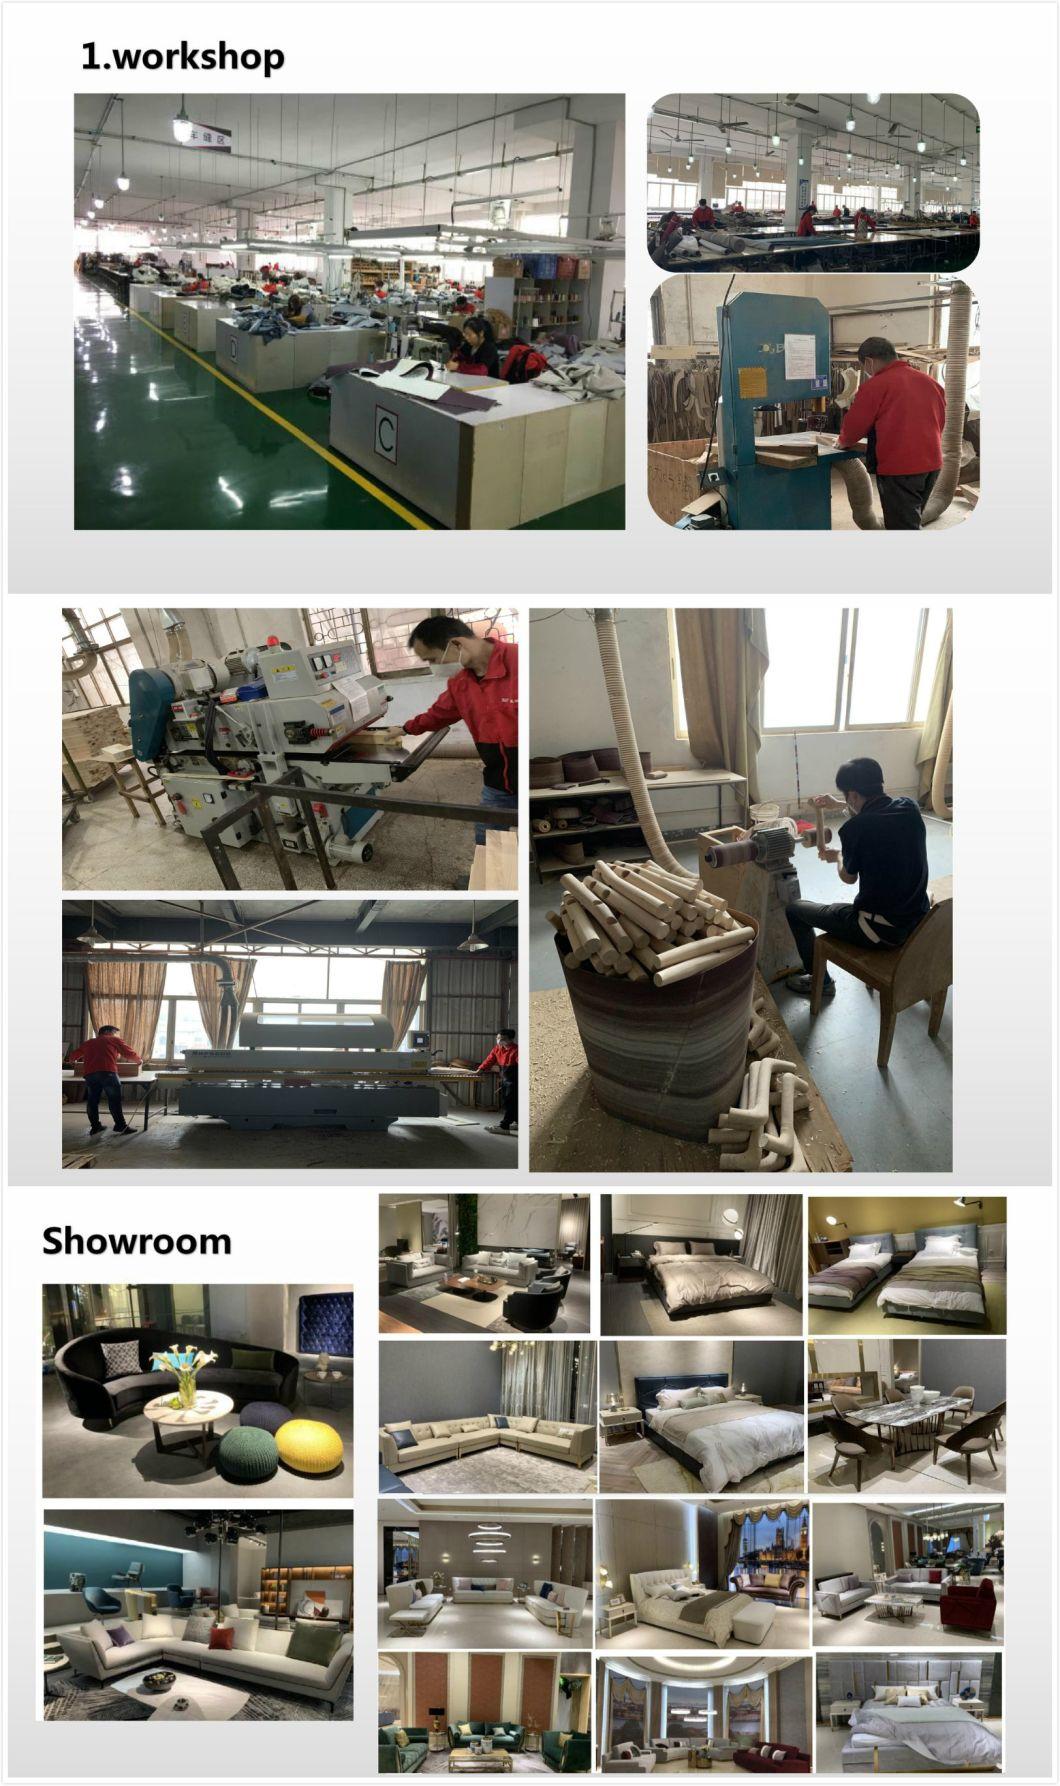 Zhida Wholesale Factory Luxury Furniture Modern King Bed